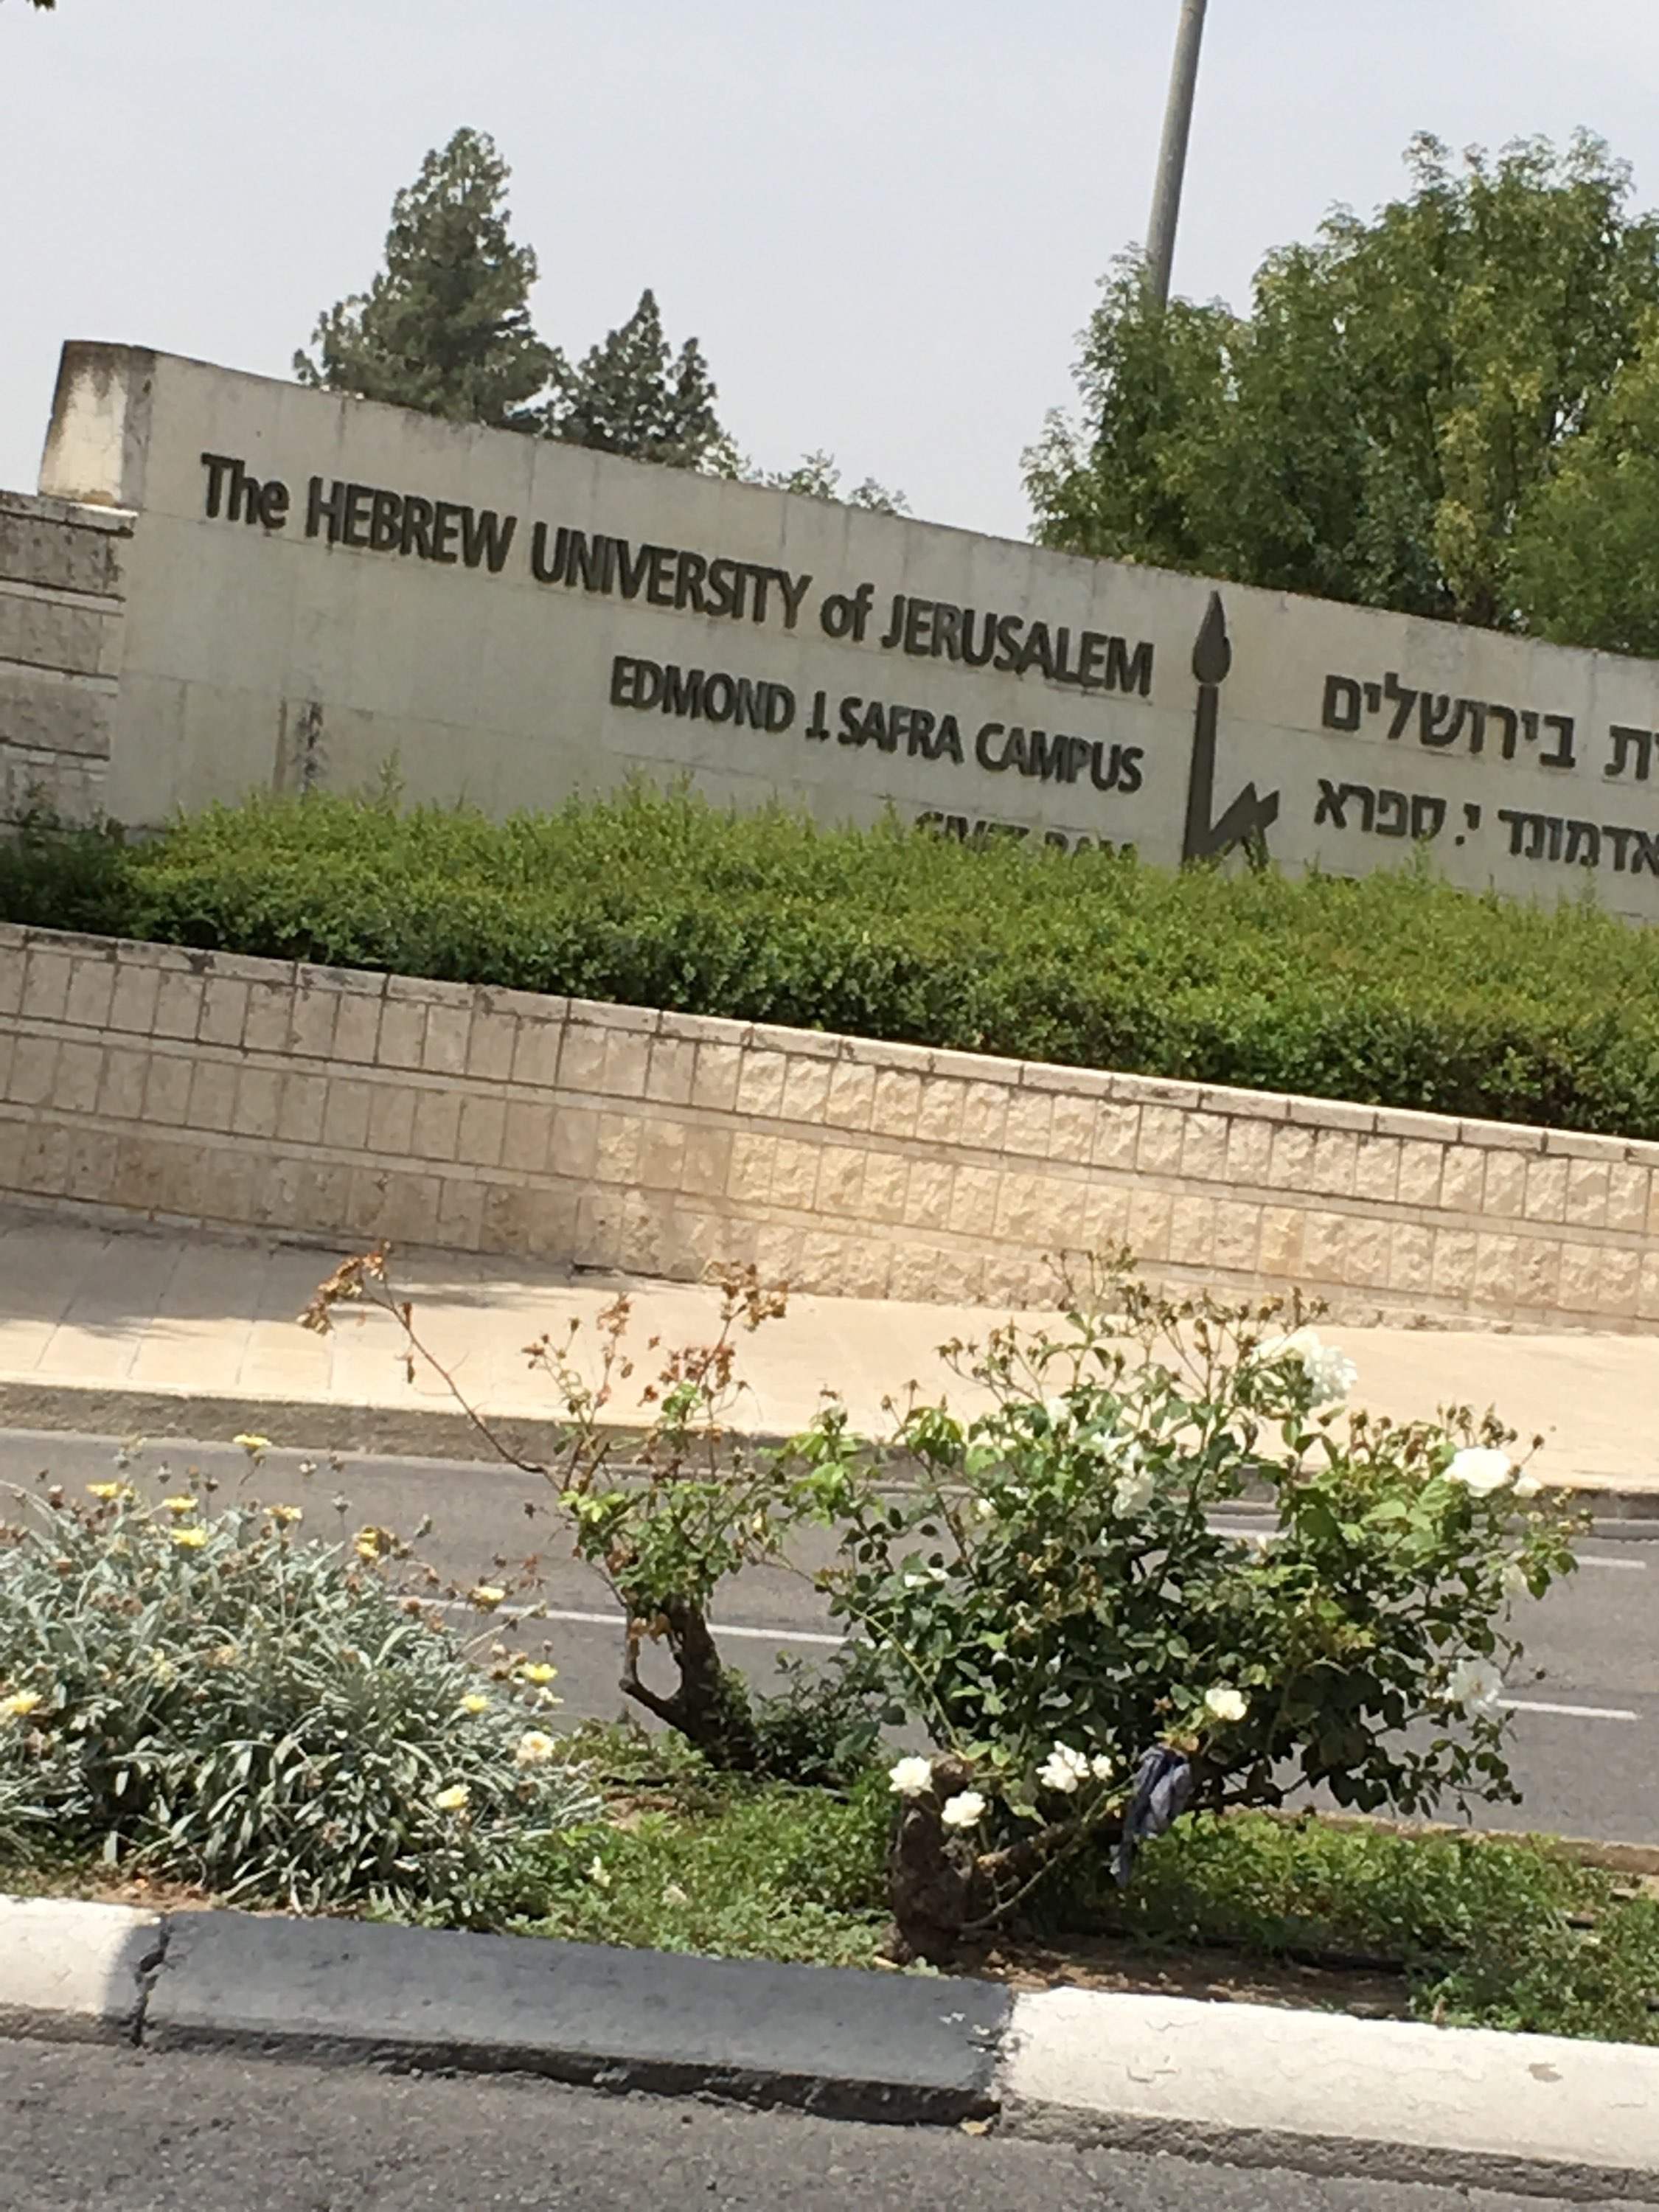 Edmond J Safra Campus, Israel